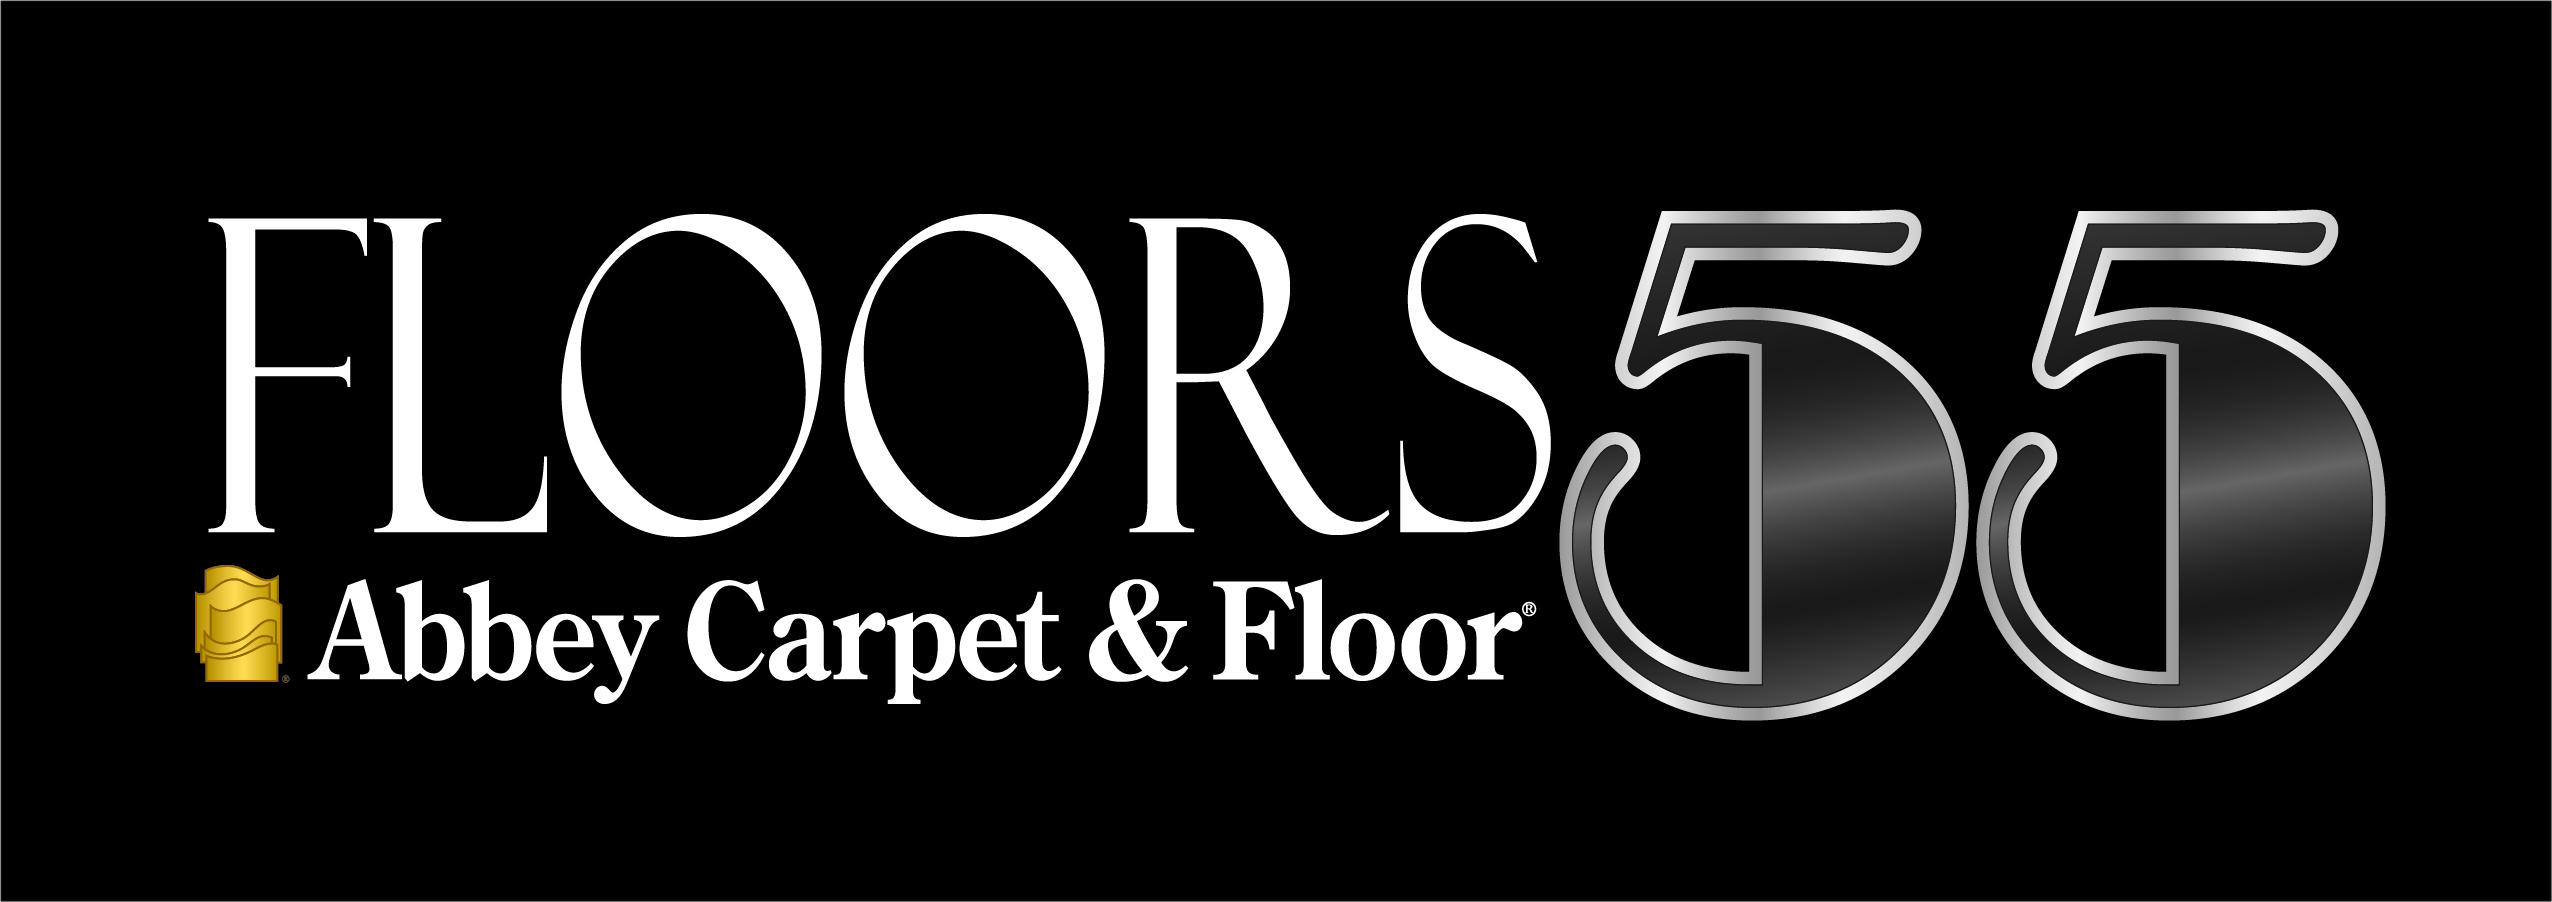 Floors 55 Logo